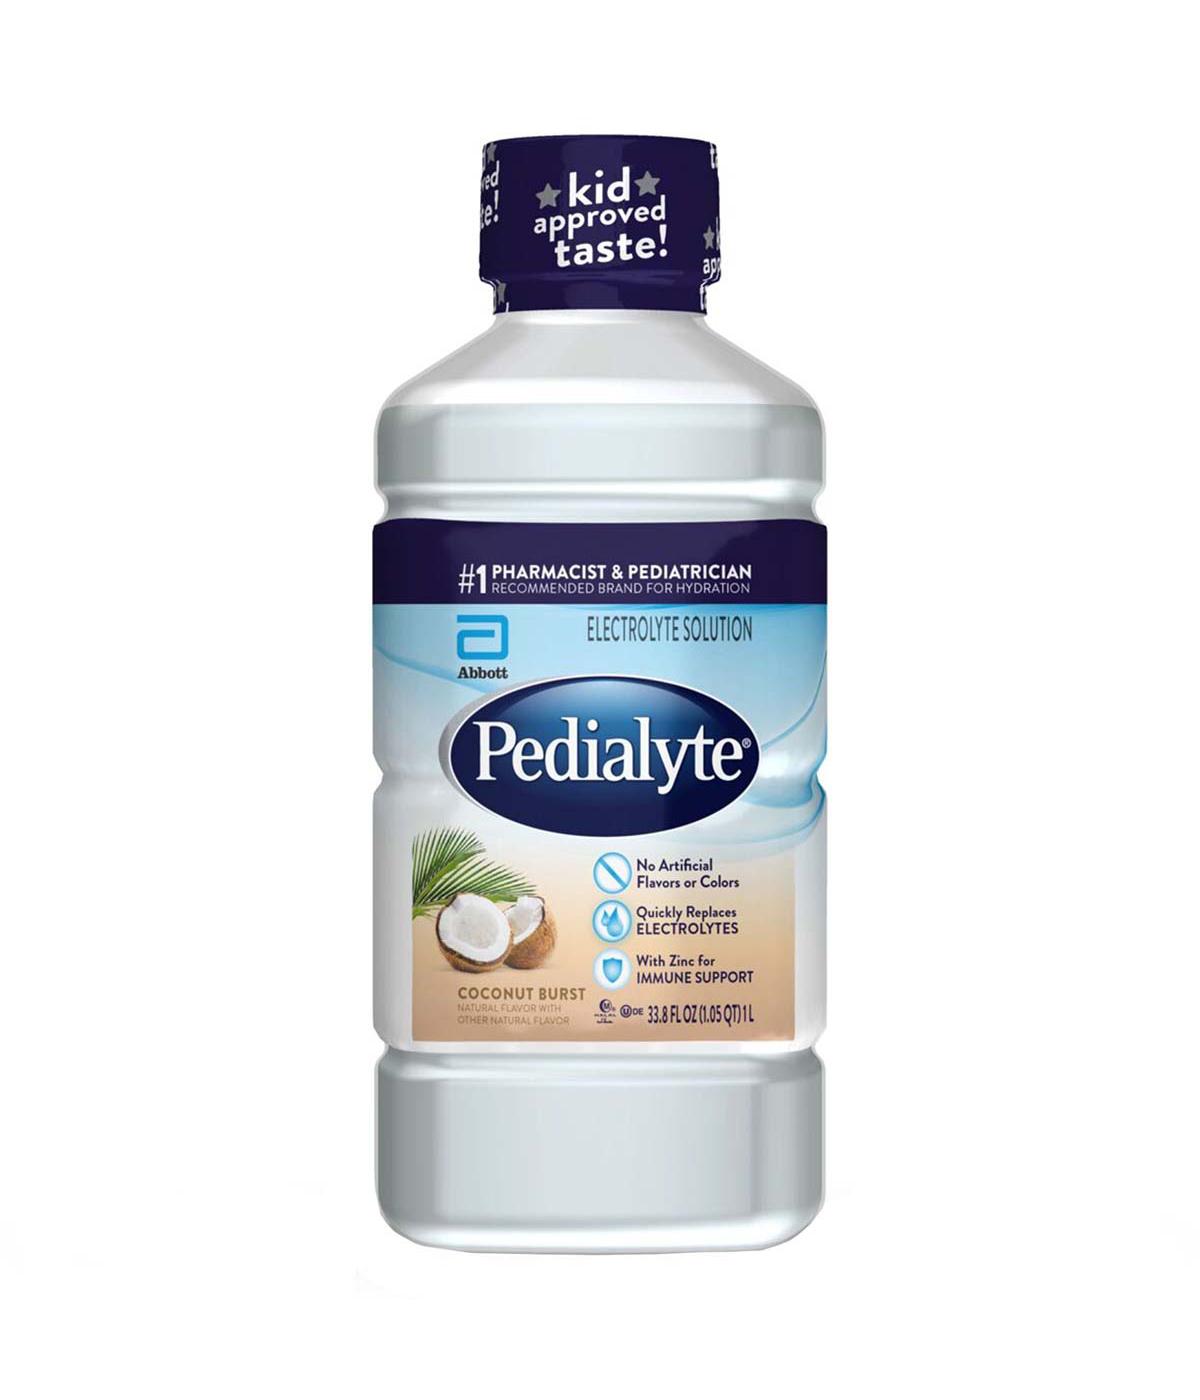 Pedialyte Electrolyte Solution - Coconut Burst; image 1 of 7